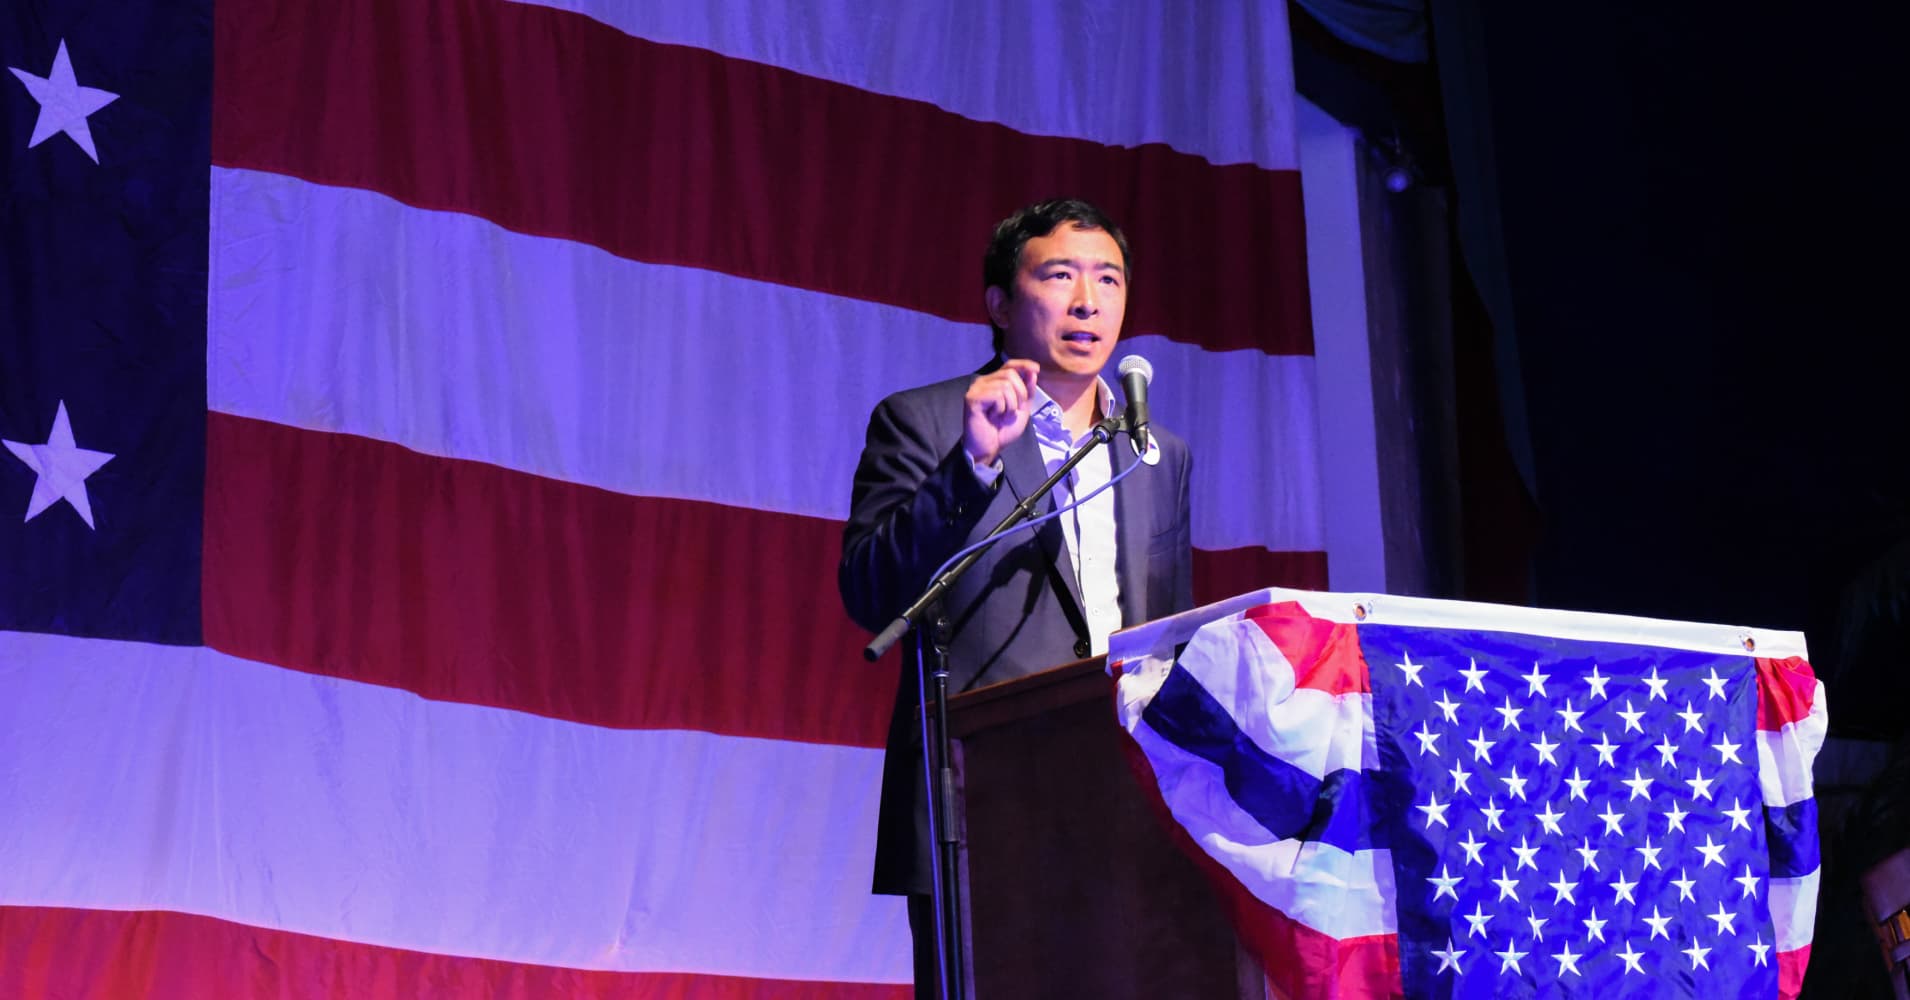 2020 hopeful Andrew Yang: The president should make $4 million a year